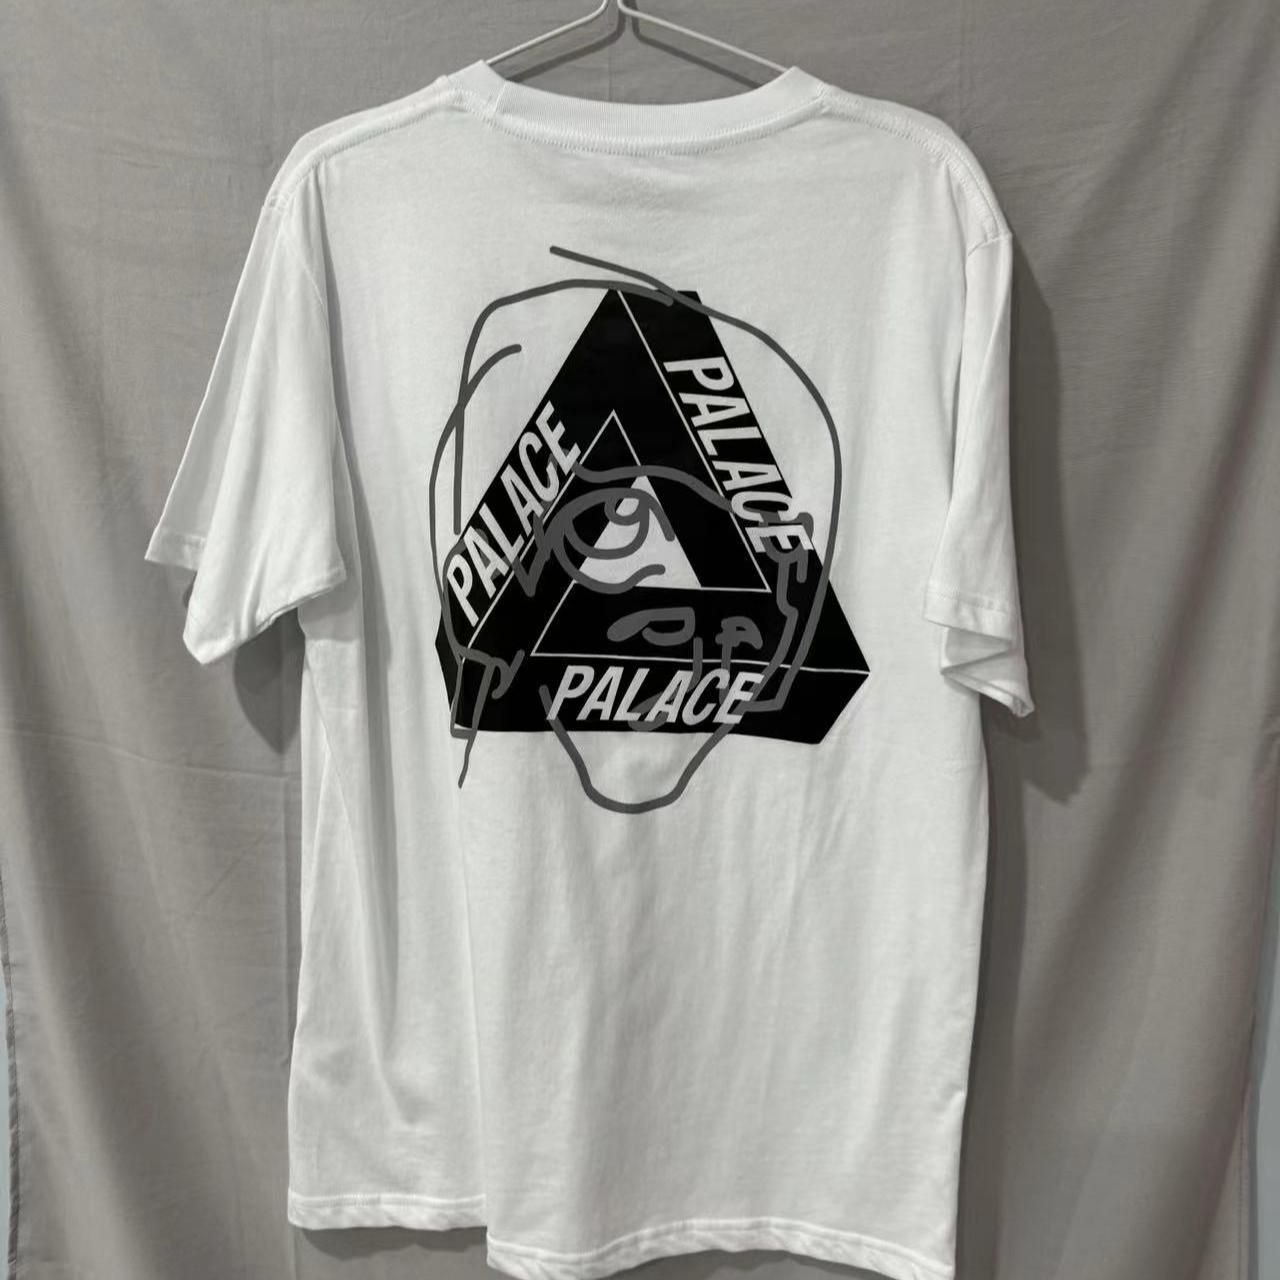 Palace Tri-Heads T-shirt White